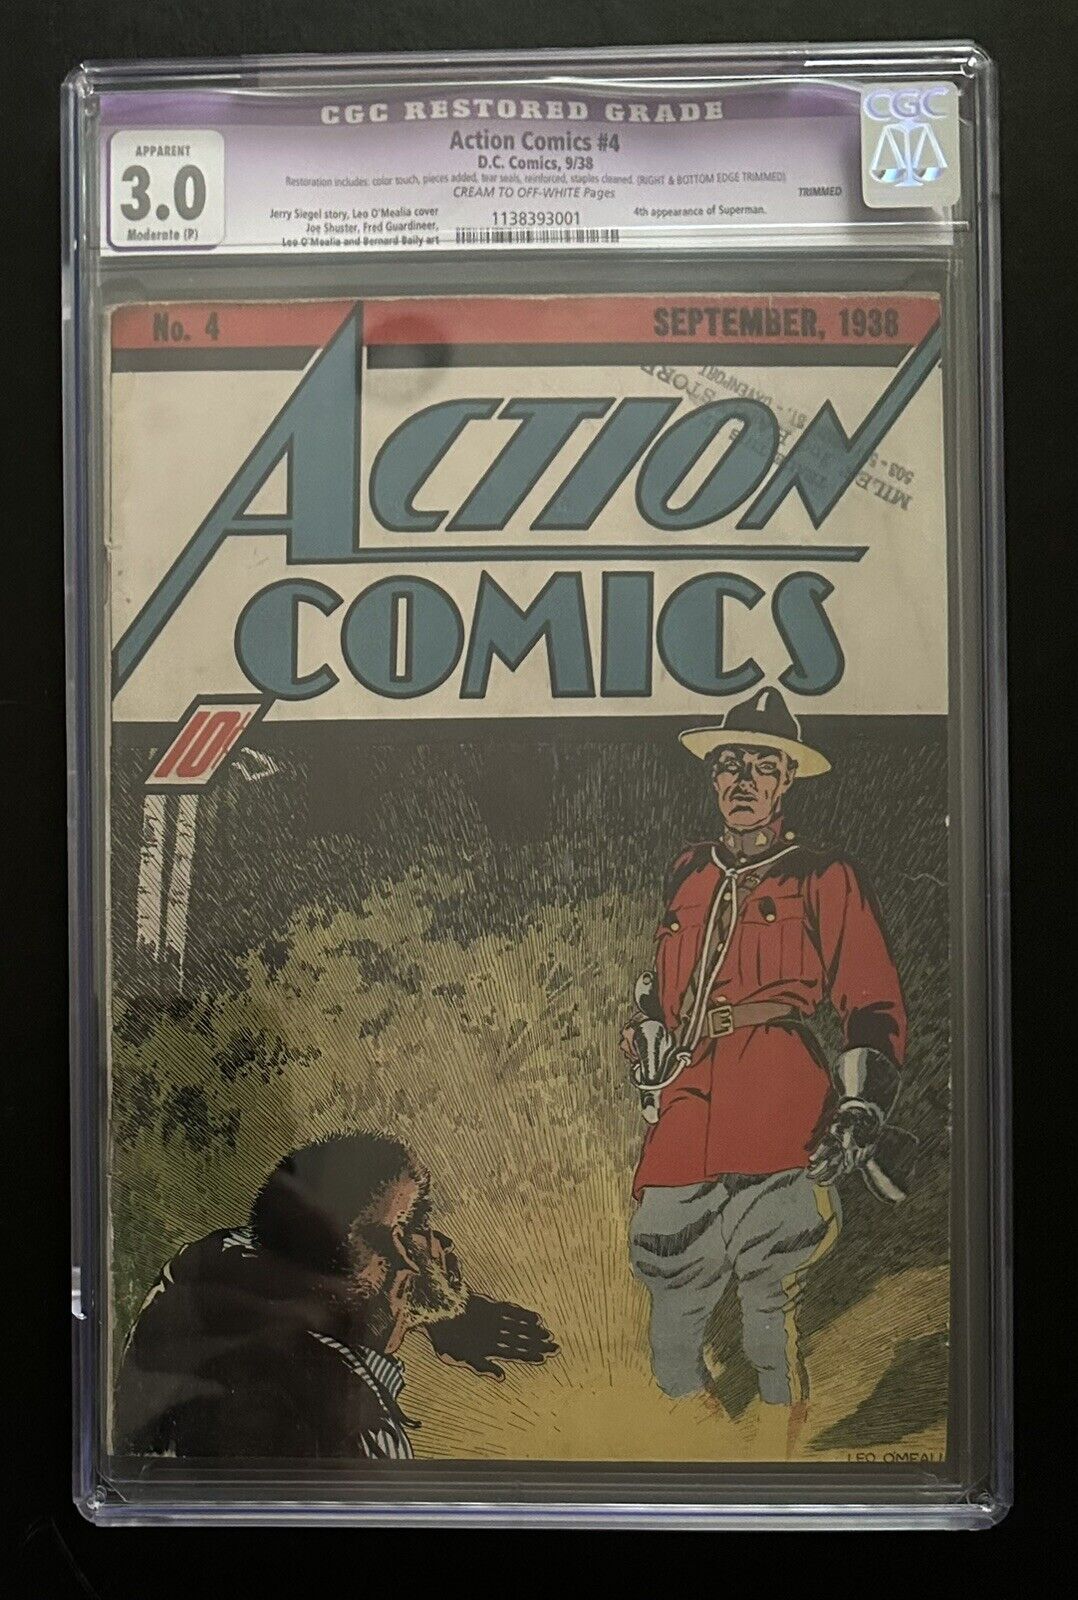 (1938) ACTION COMICS #4 CGC 3.0 Restored 4th App SUPERMAN Rare Golden Age